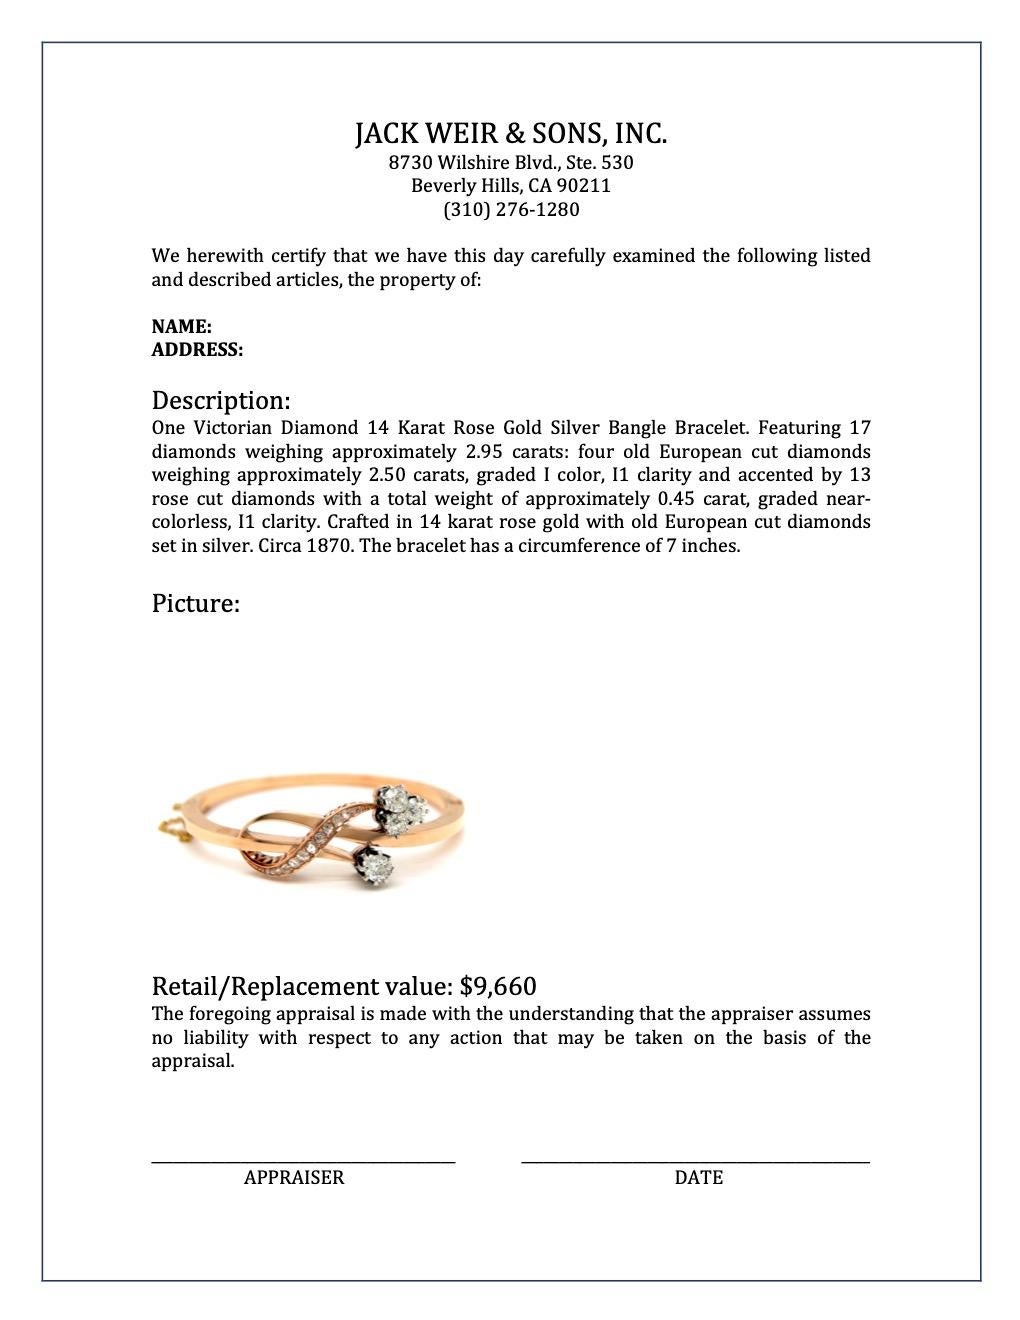 Women's or Men's Victorian Diamond 14 Karat Rose Gold Bangle Bracelet